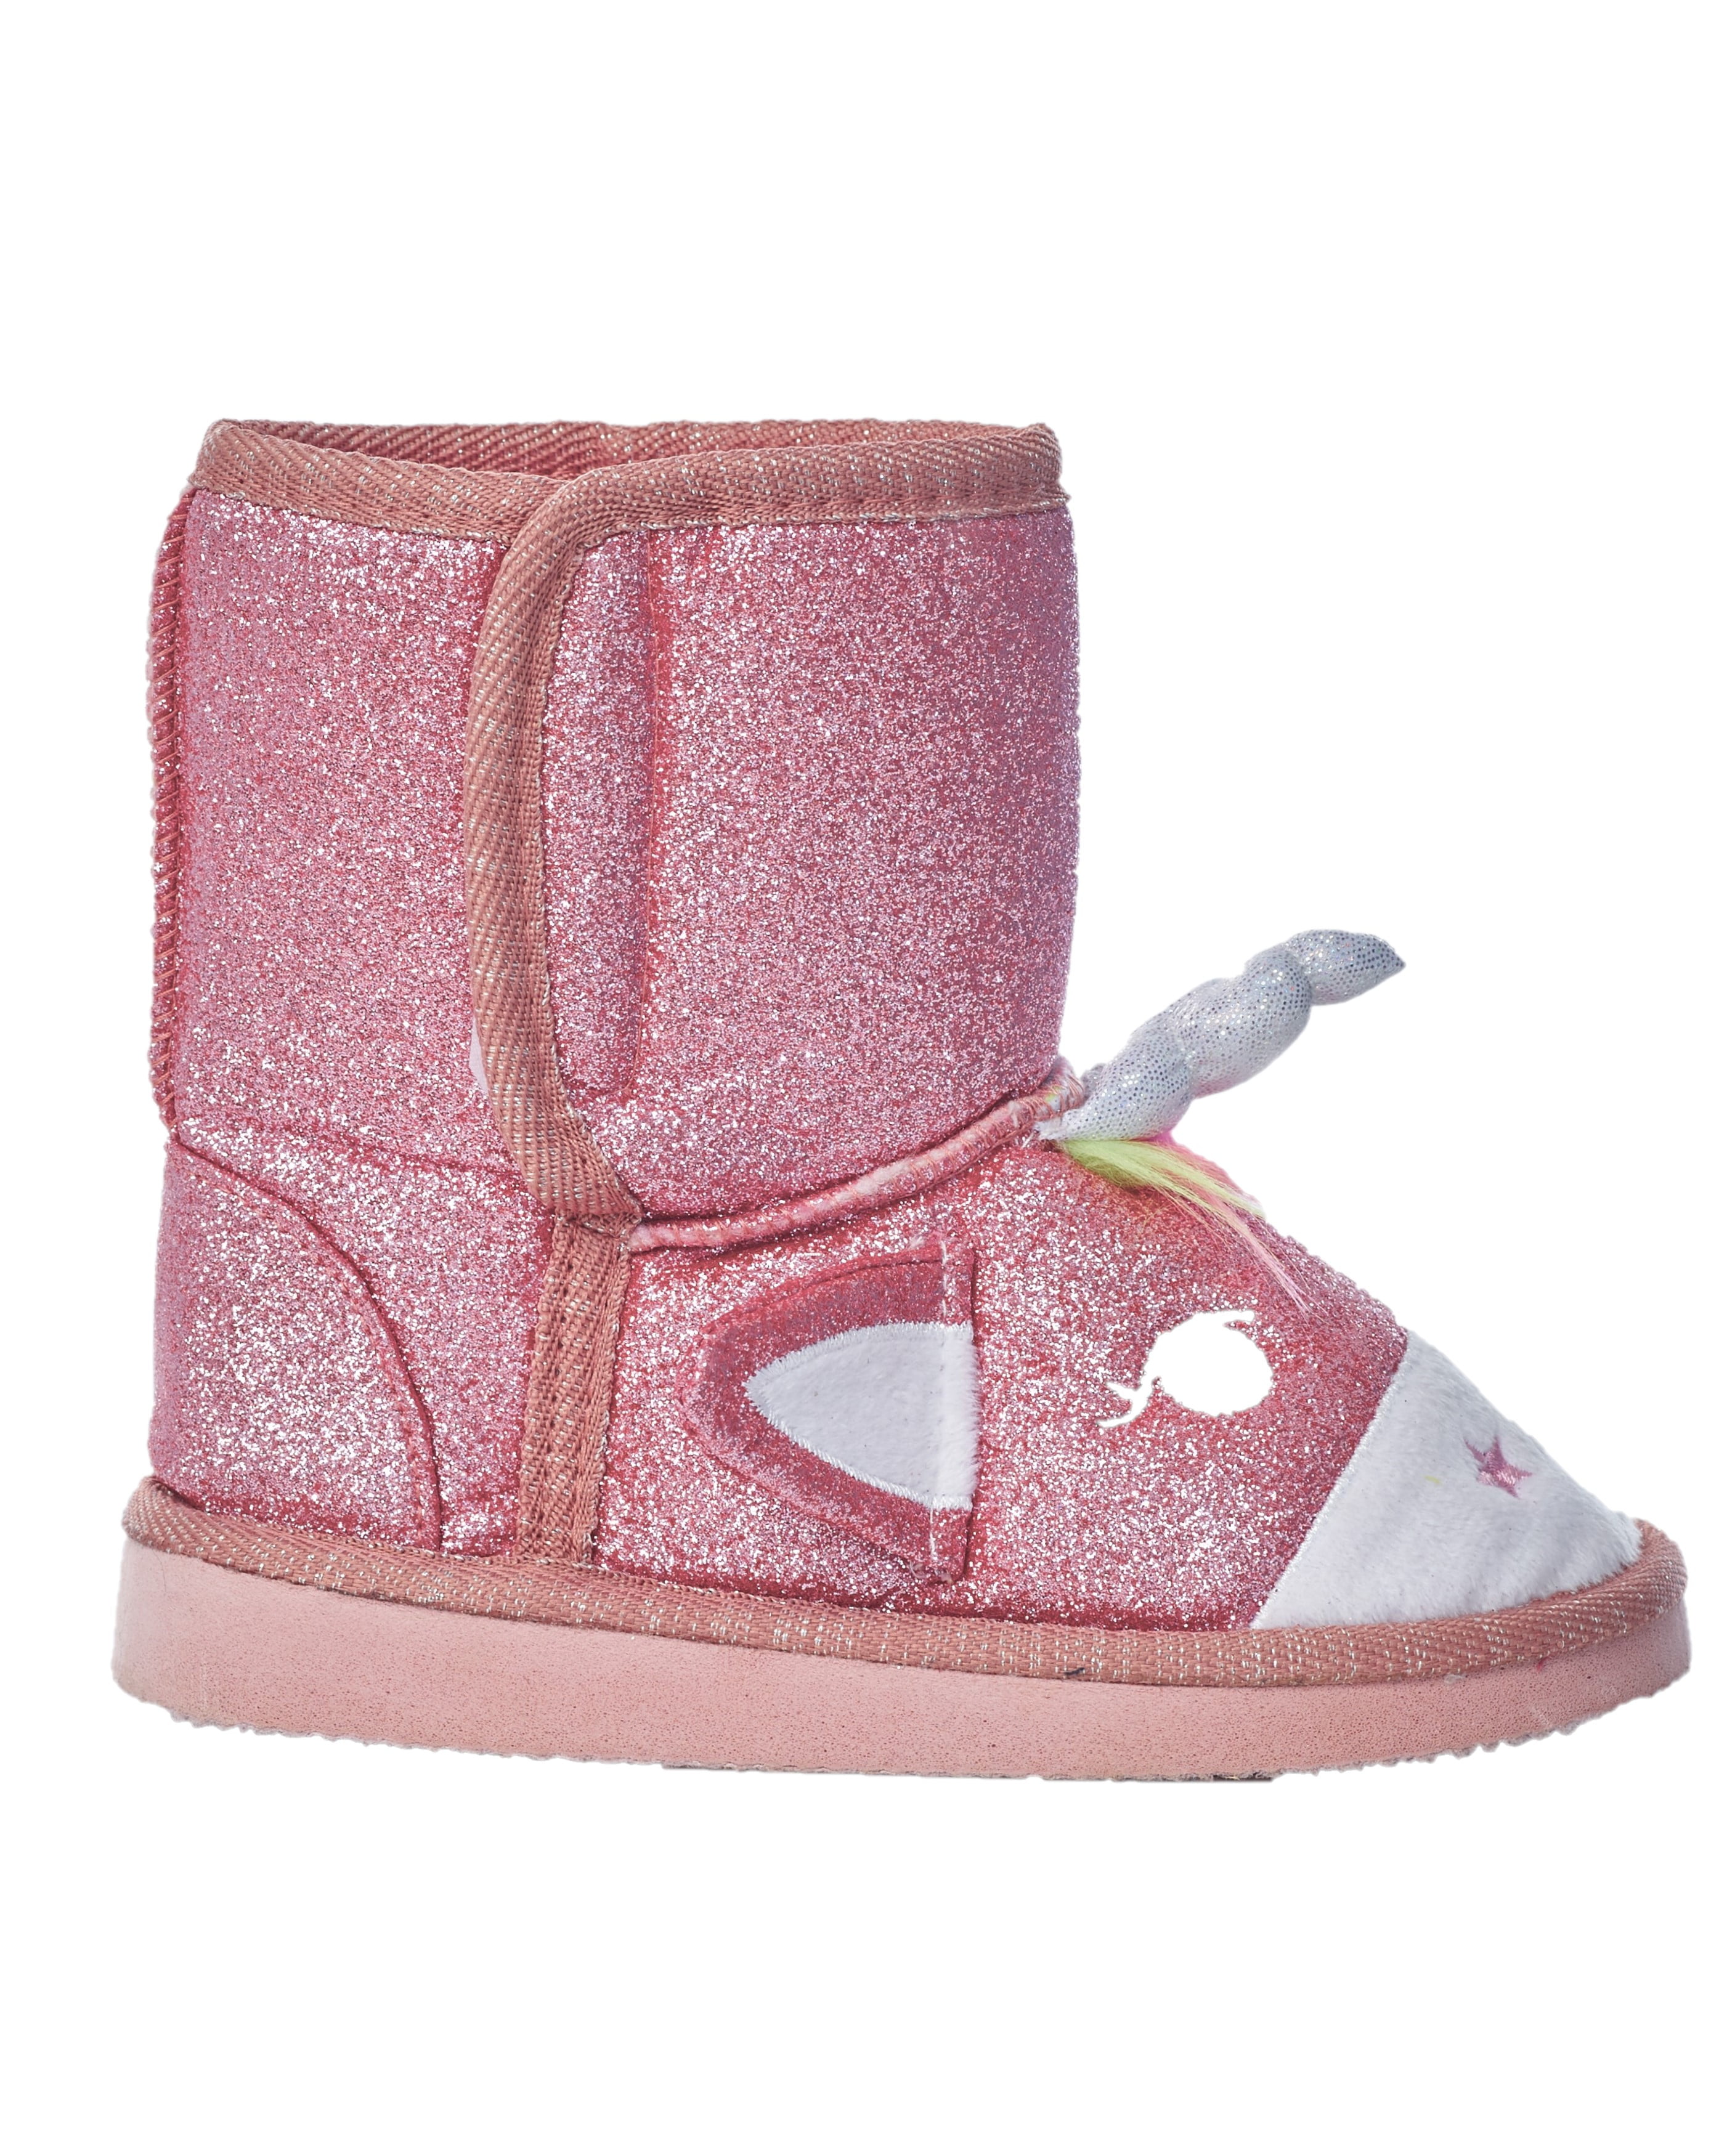 Toddlers Girls Kids Unicorn Snow Boots  Winter for Lit girls SnowBoots Children 